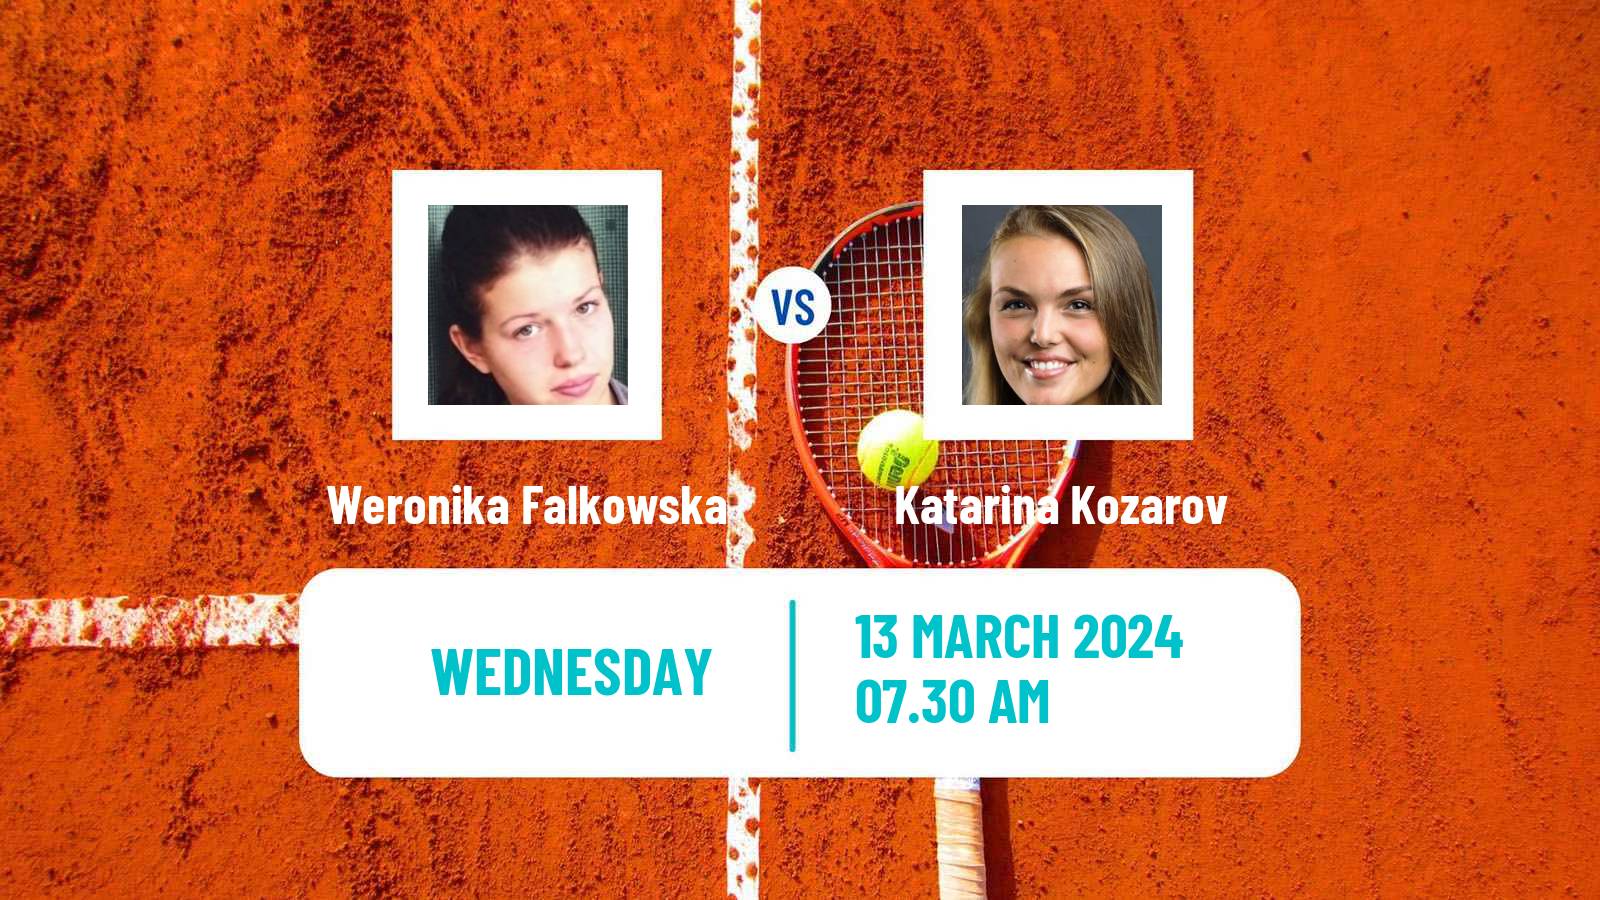 Tennis ITF W35 Solarino 2 Women Weronika Falkowska - Katarina Kozarov